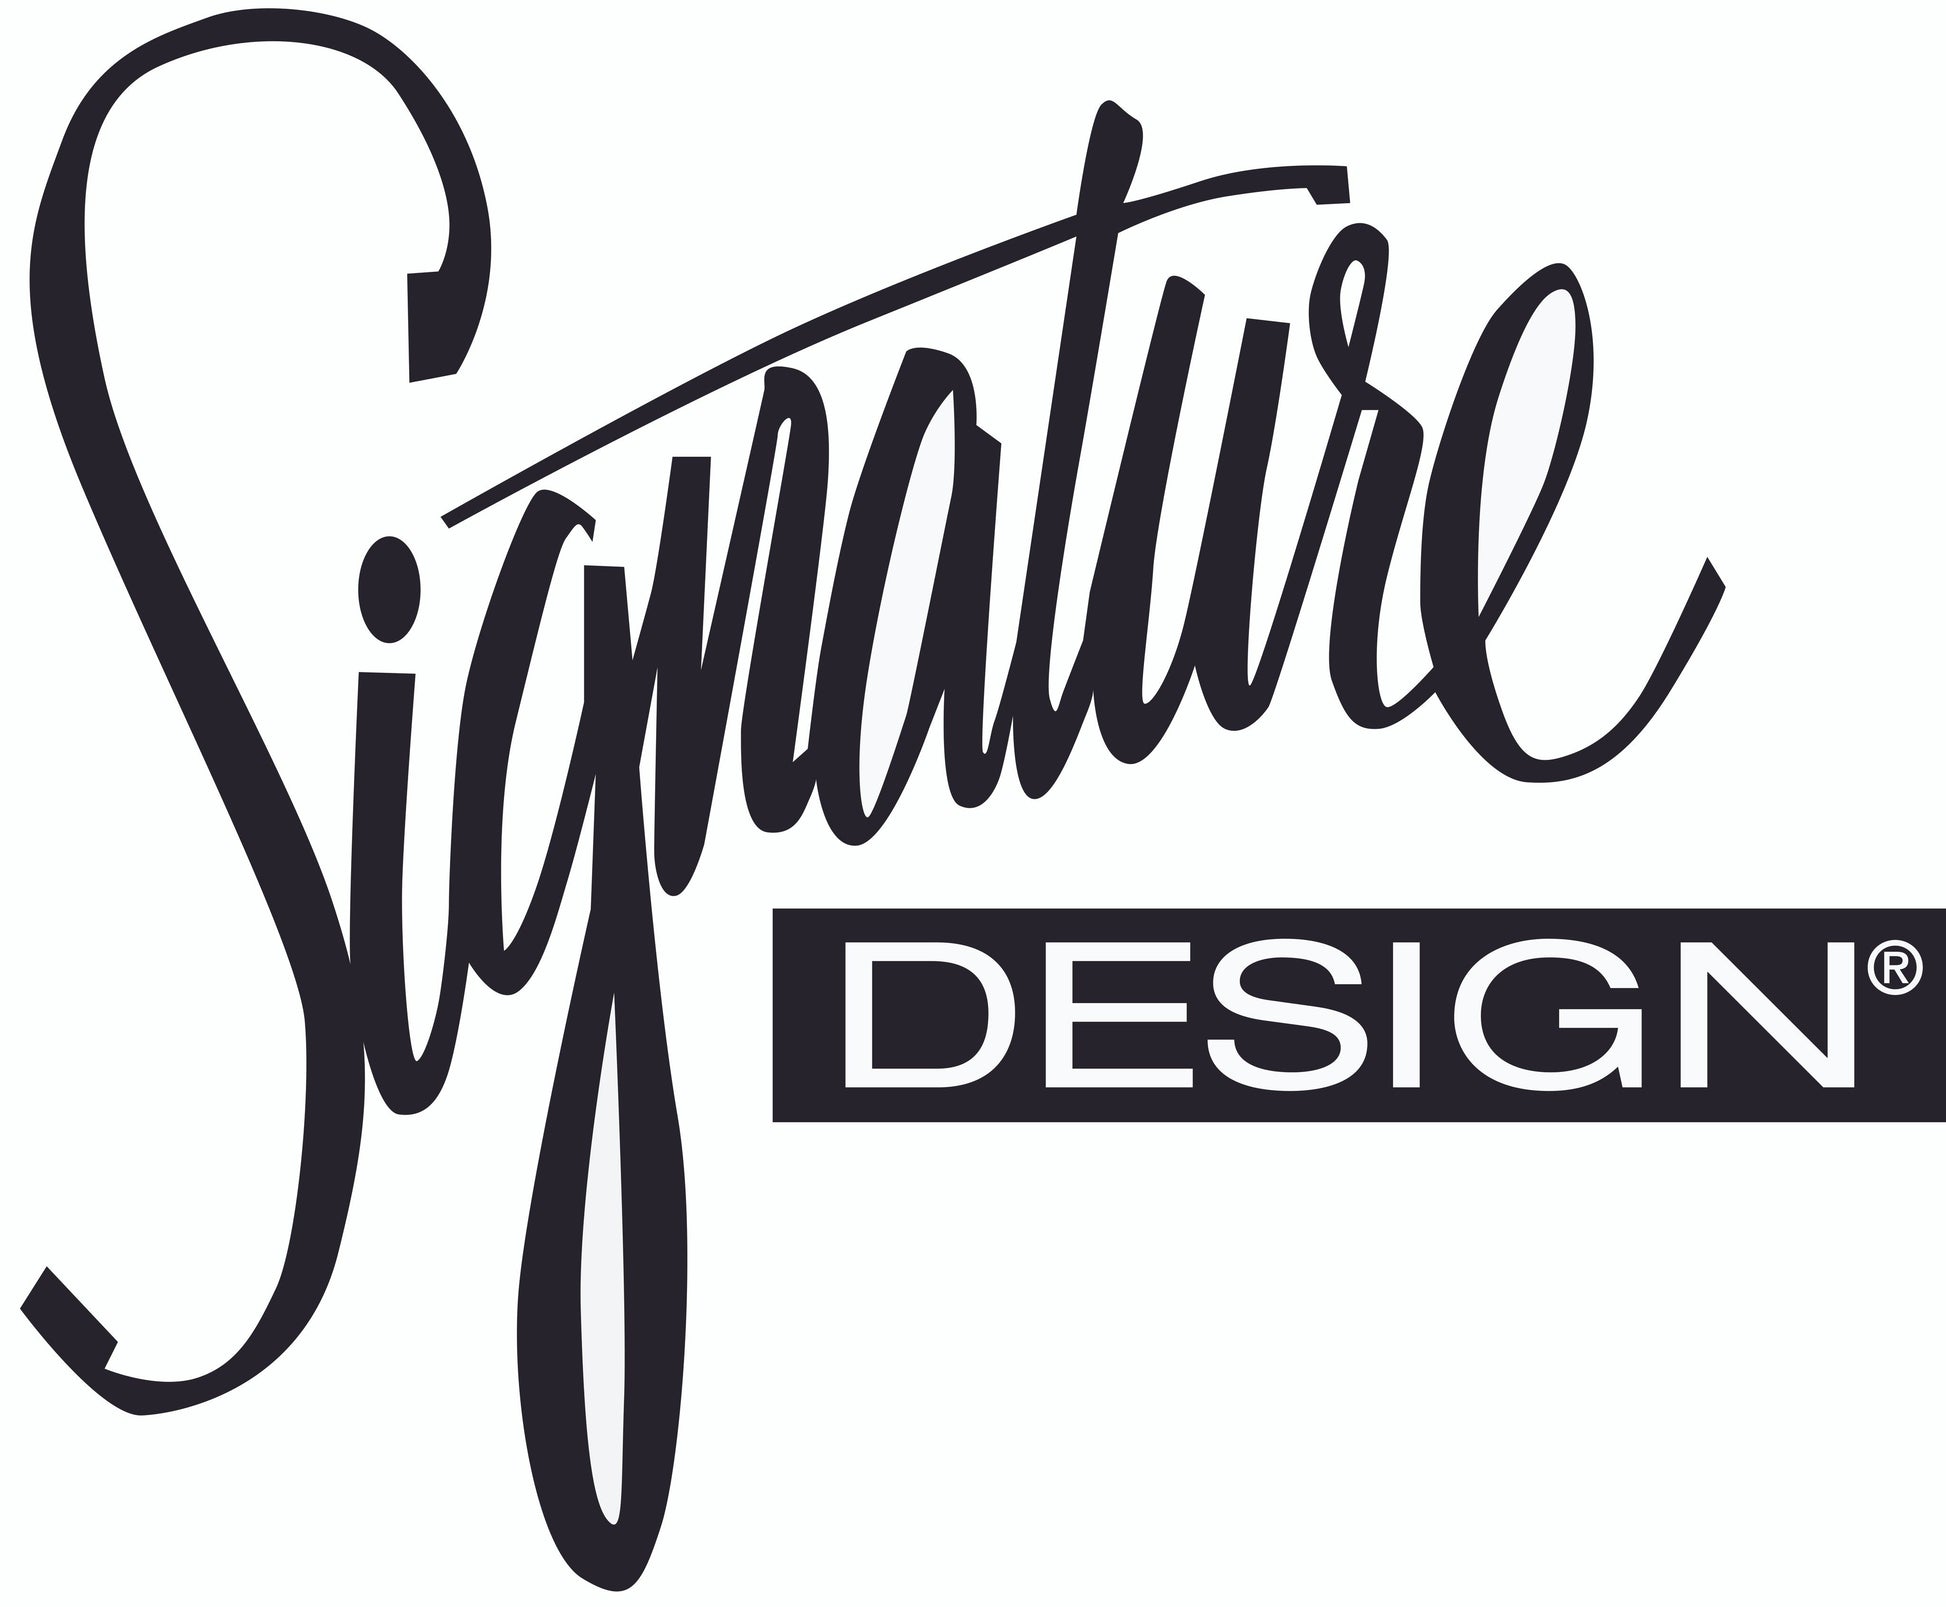 Burkhaus Sofa Table Signature Design by Ashley®